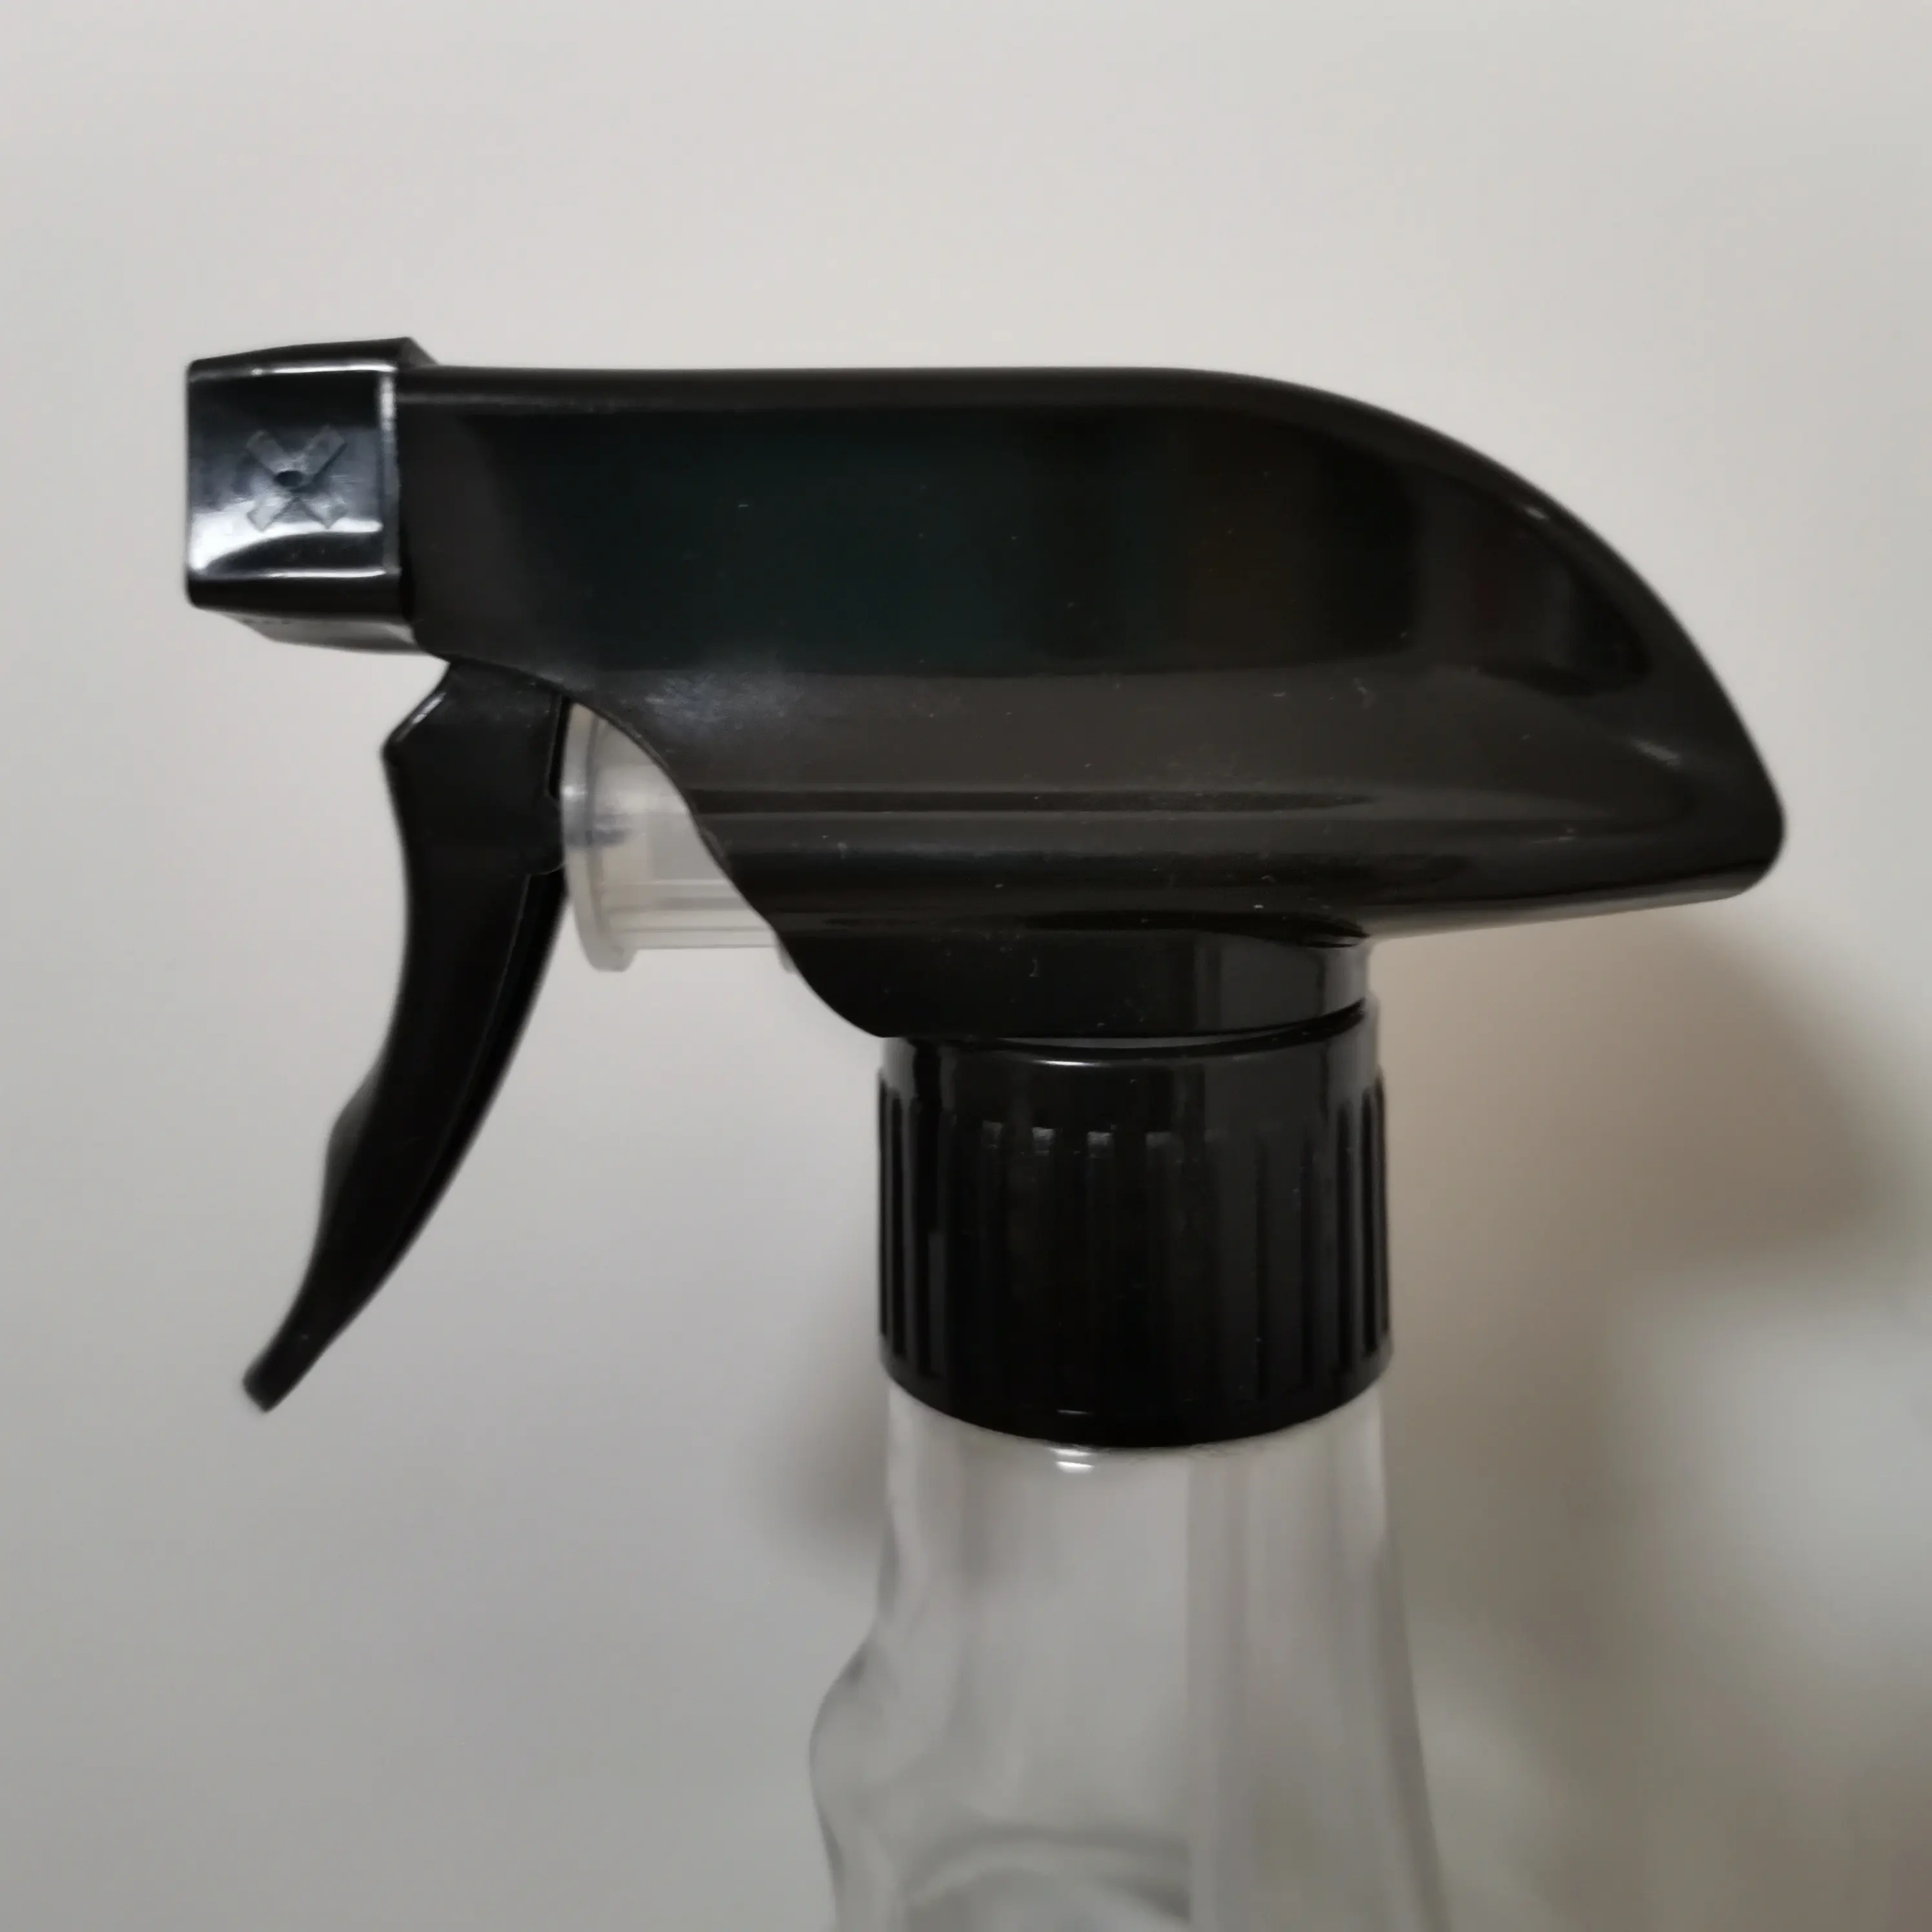 Wholesale triger sprayer black trigger sprayer for bottle